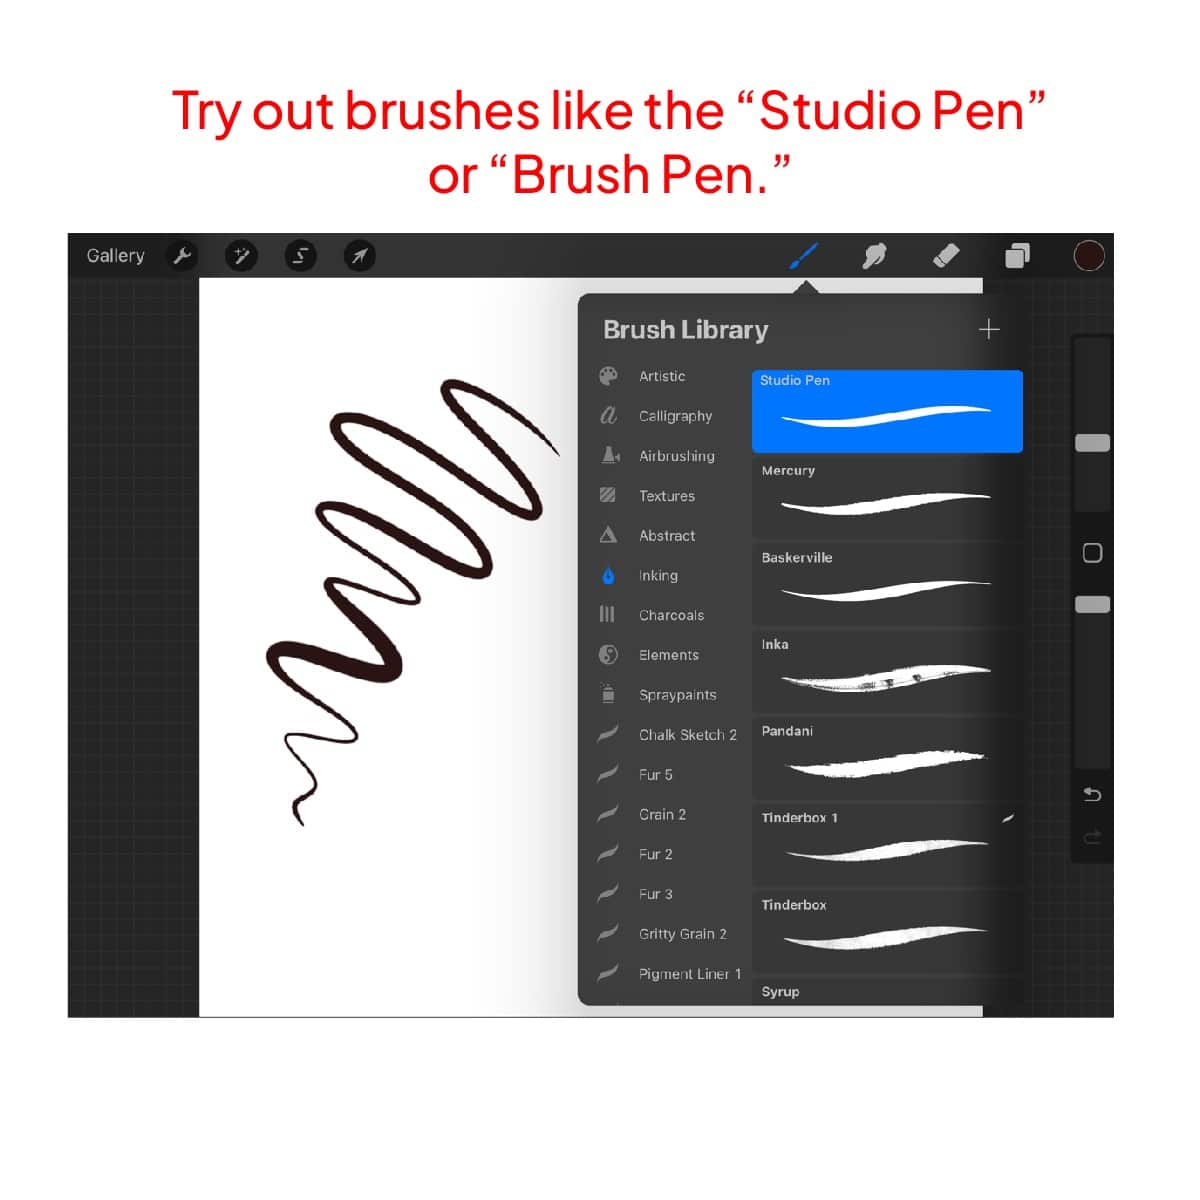 Studio pen and Brush pen brushes